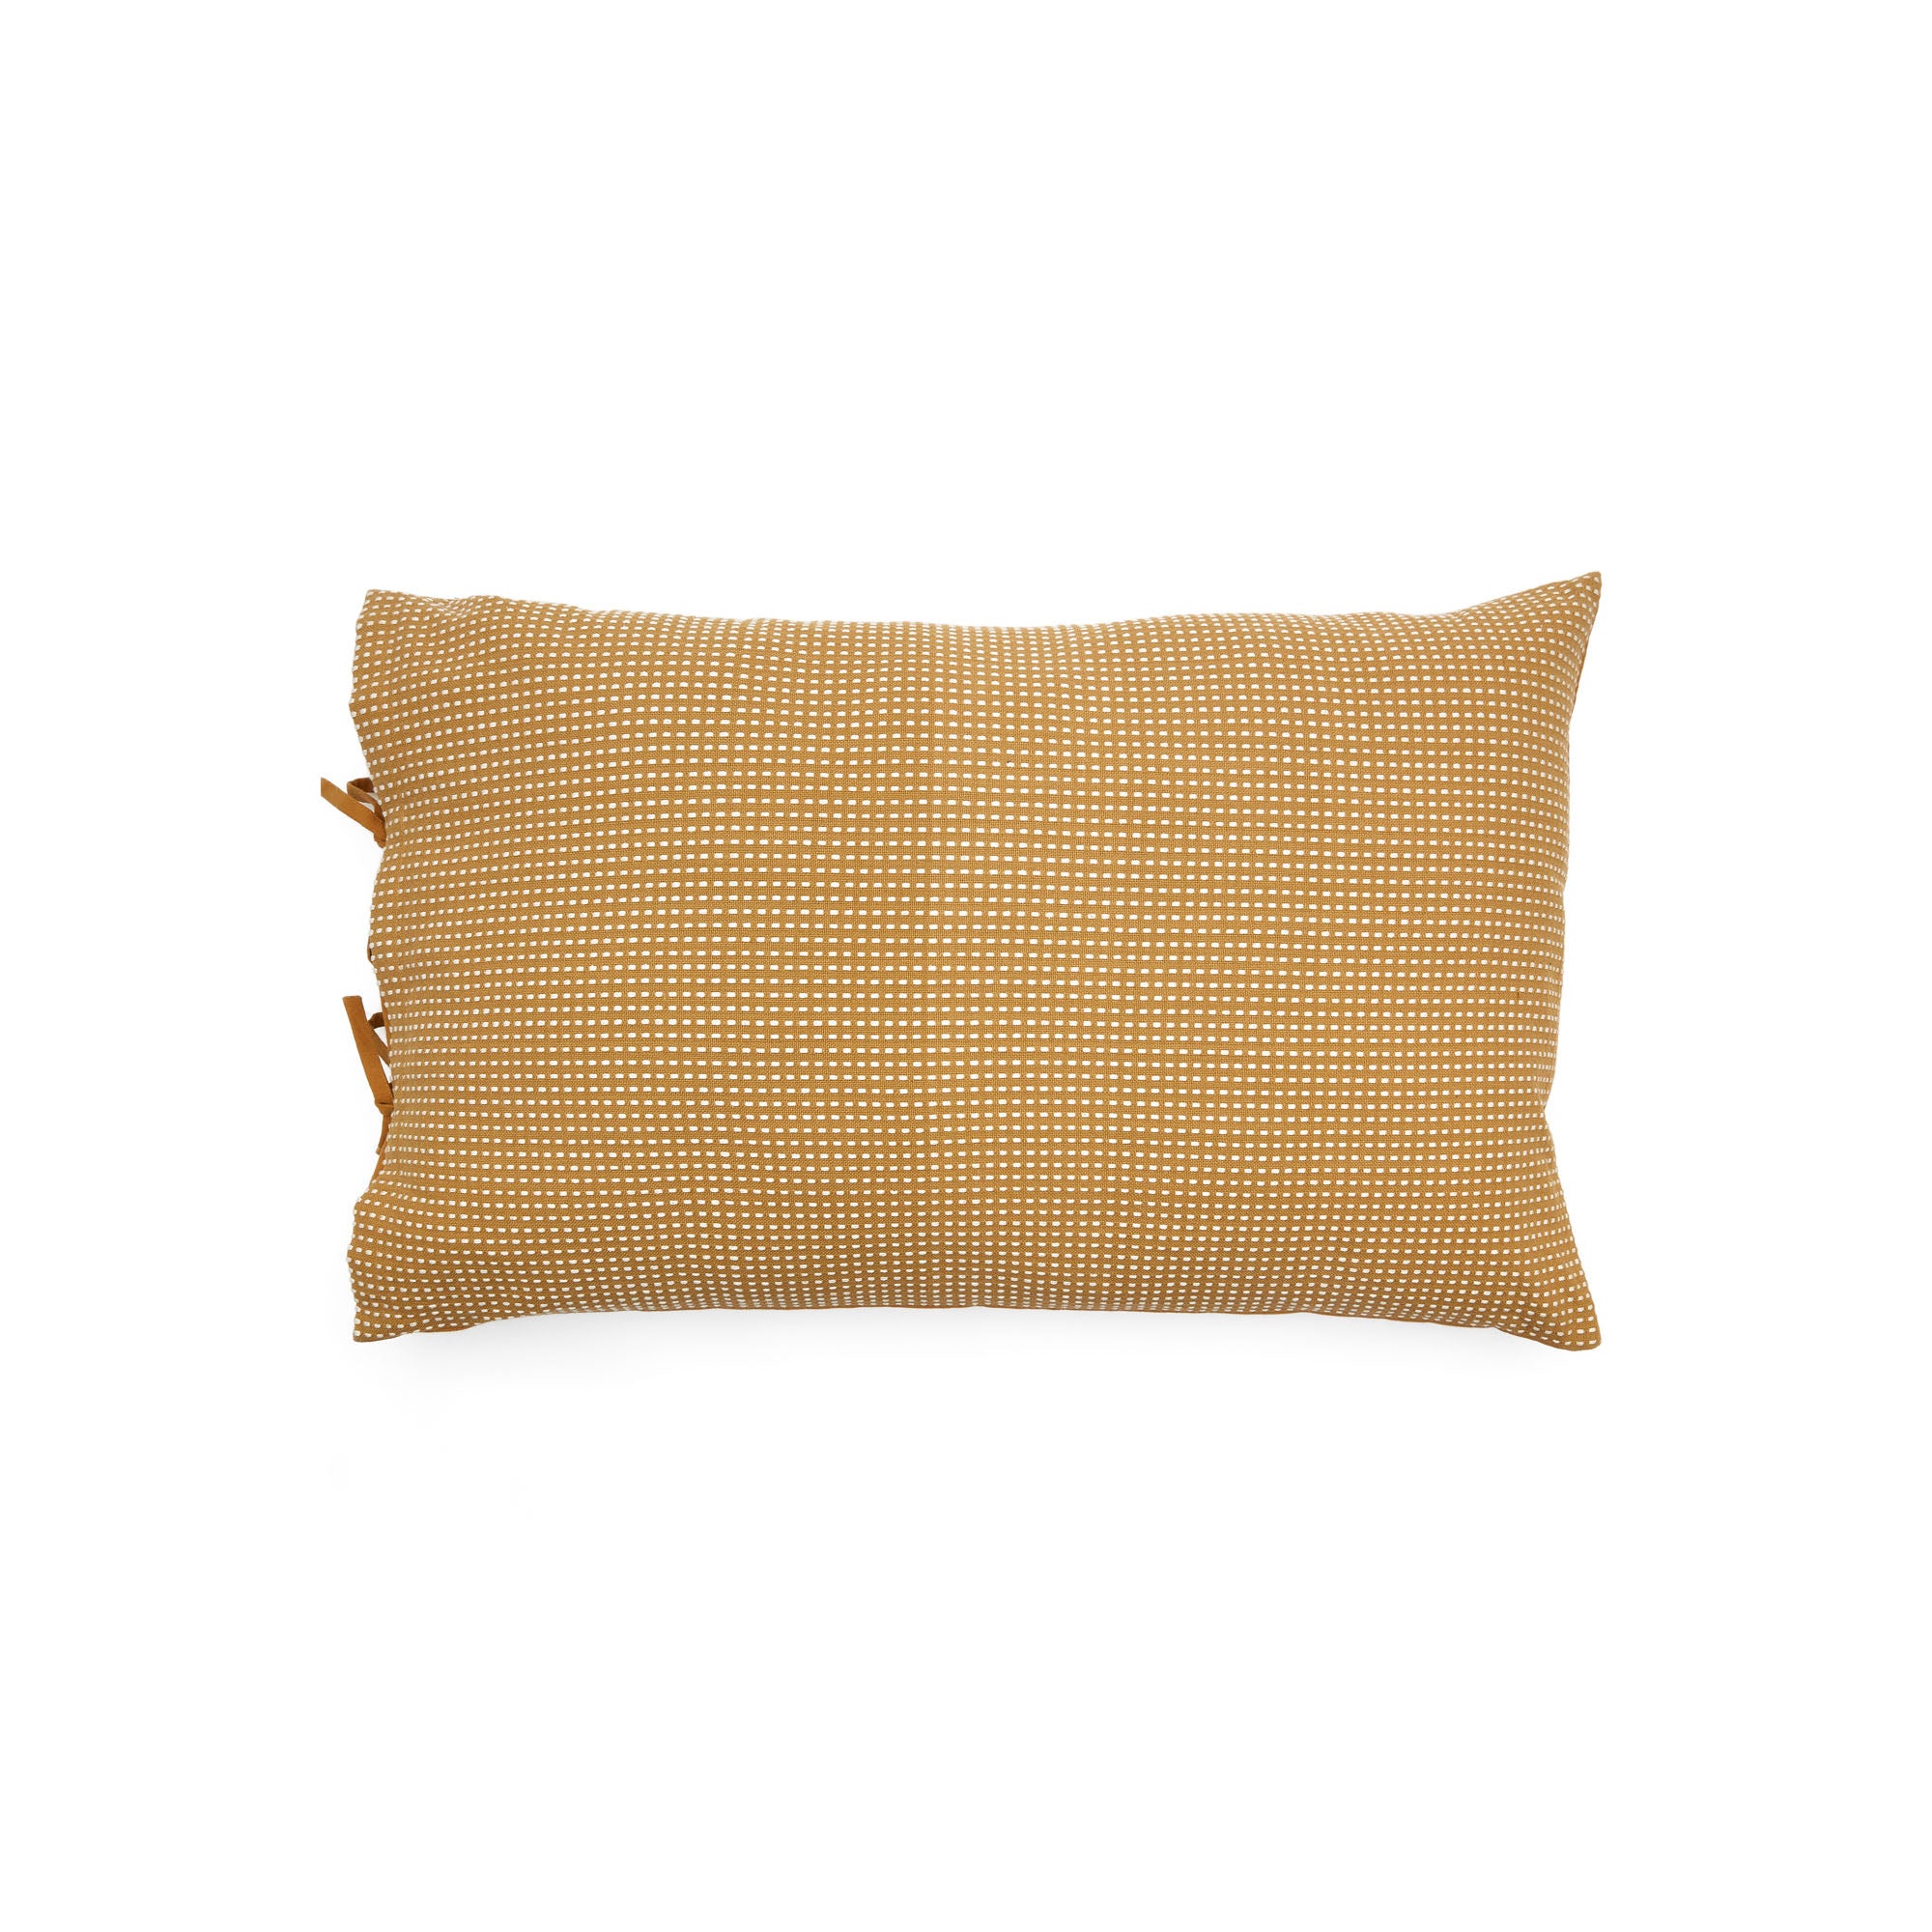 Trufa 100% cotton cushion with mustard and white backstitch, 40 x 60 cm